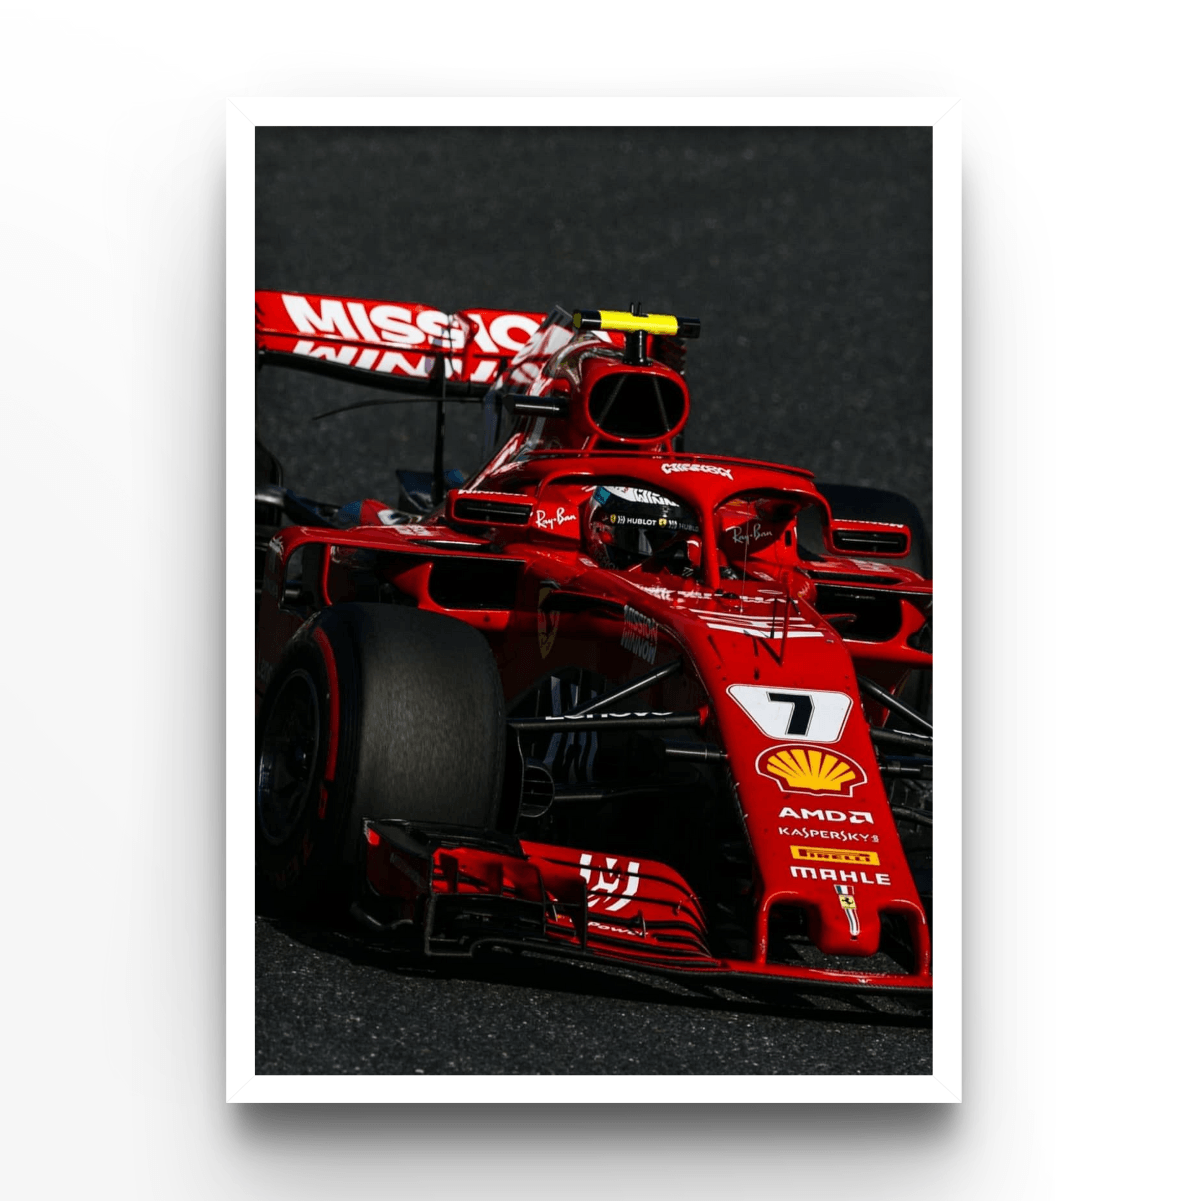 Kimi Räikkönen 1 - A4, A3, A2 Posters Base - Poster Print Shop / Art Prints / PostersBase